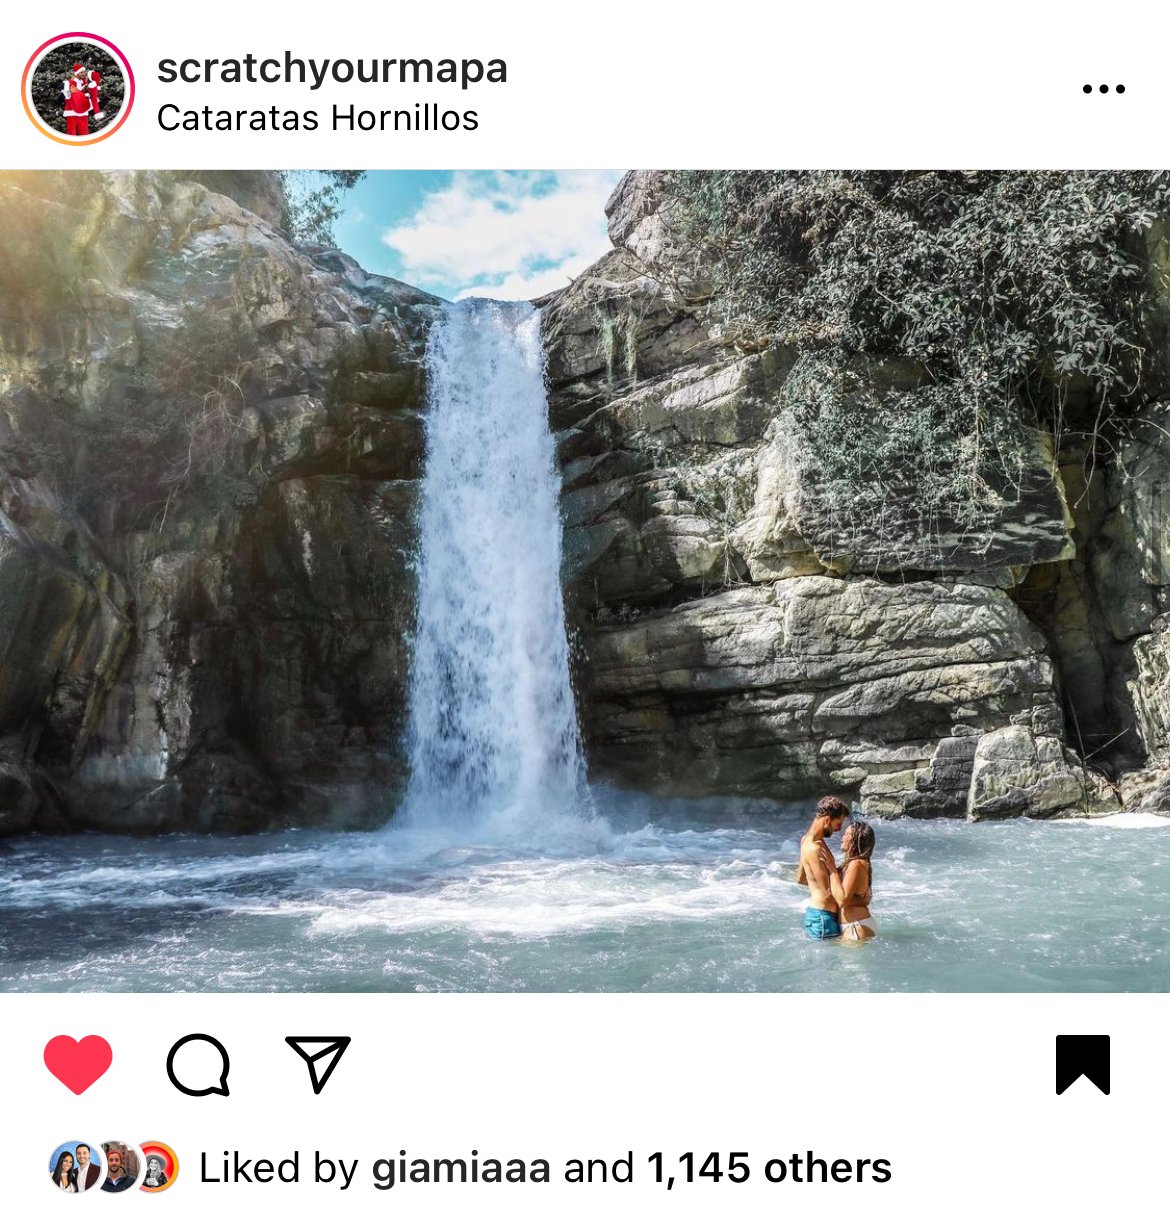 Cataratas de Hornilos, waterfalls in Peru